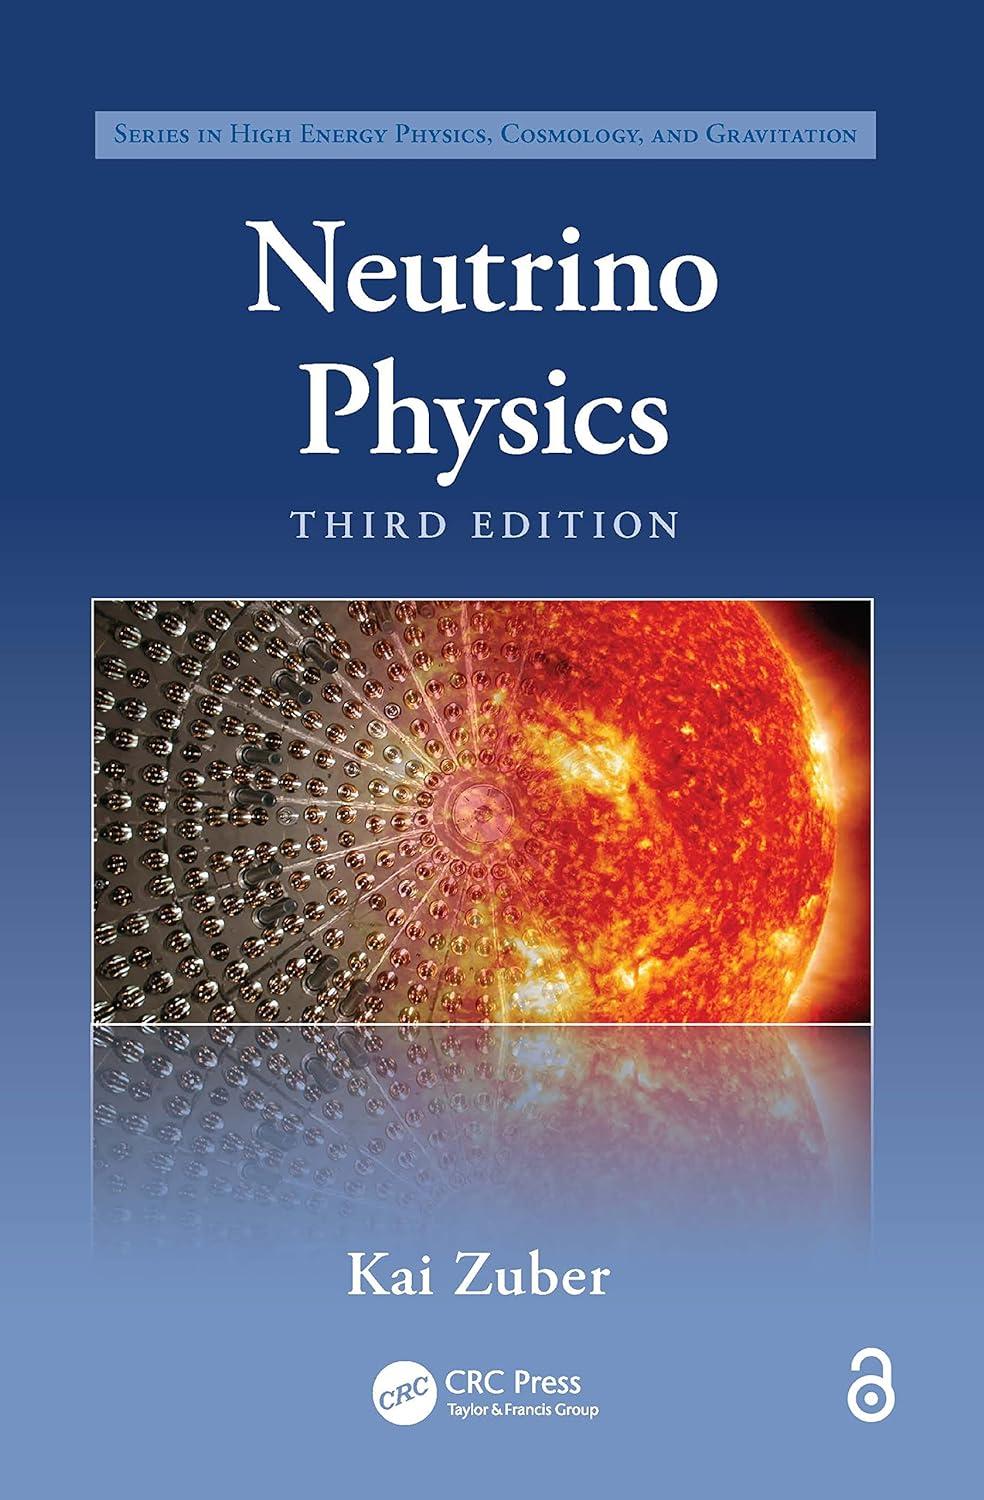 neutrino physics 3rd edition kai zuber 1351764578, 9781351764575